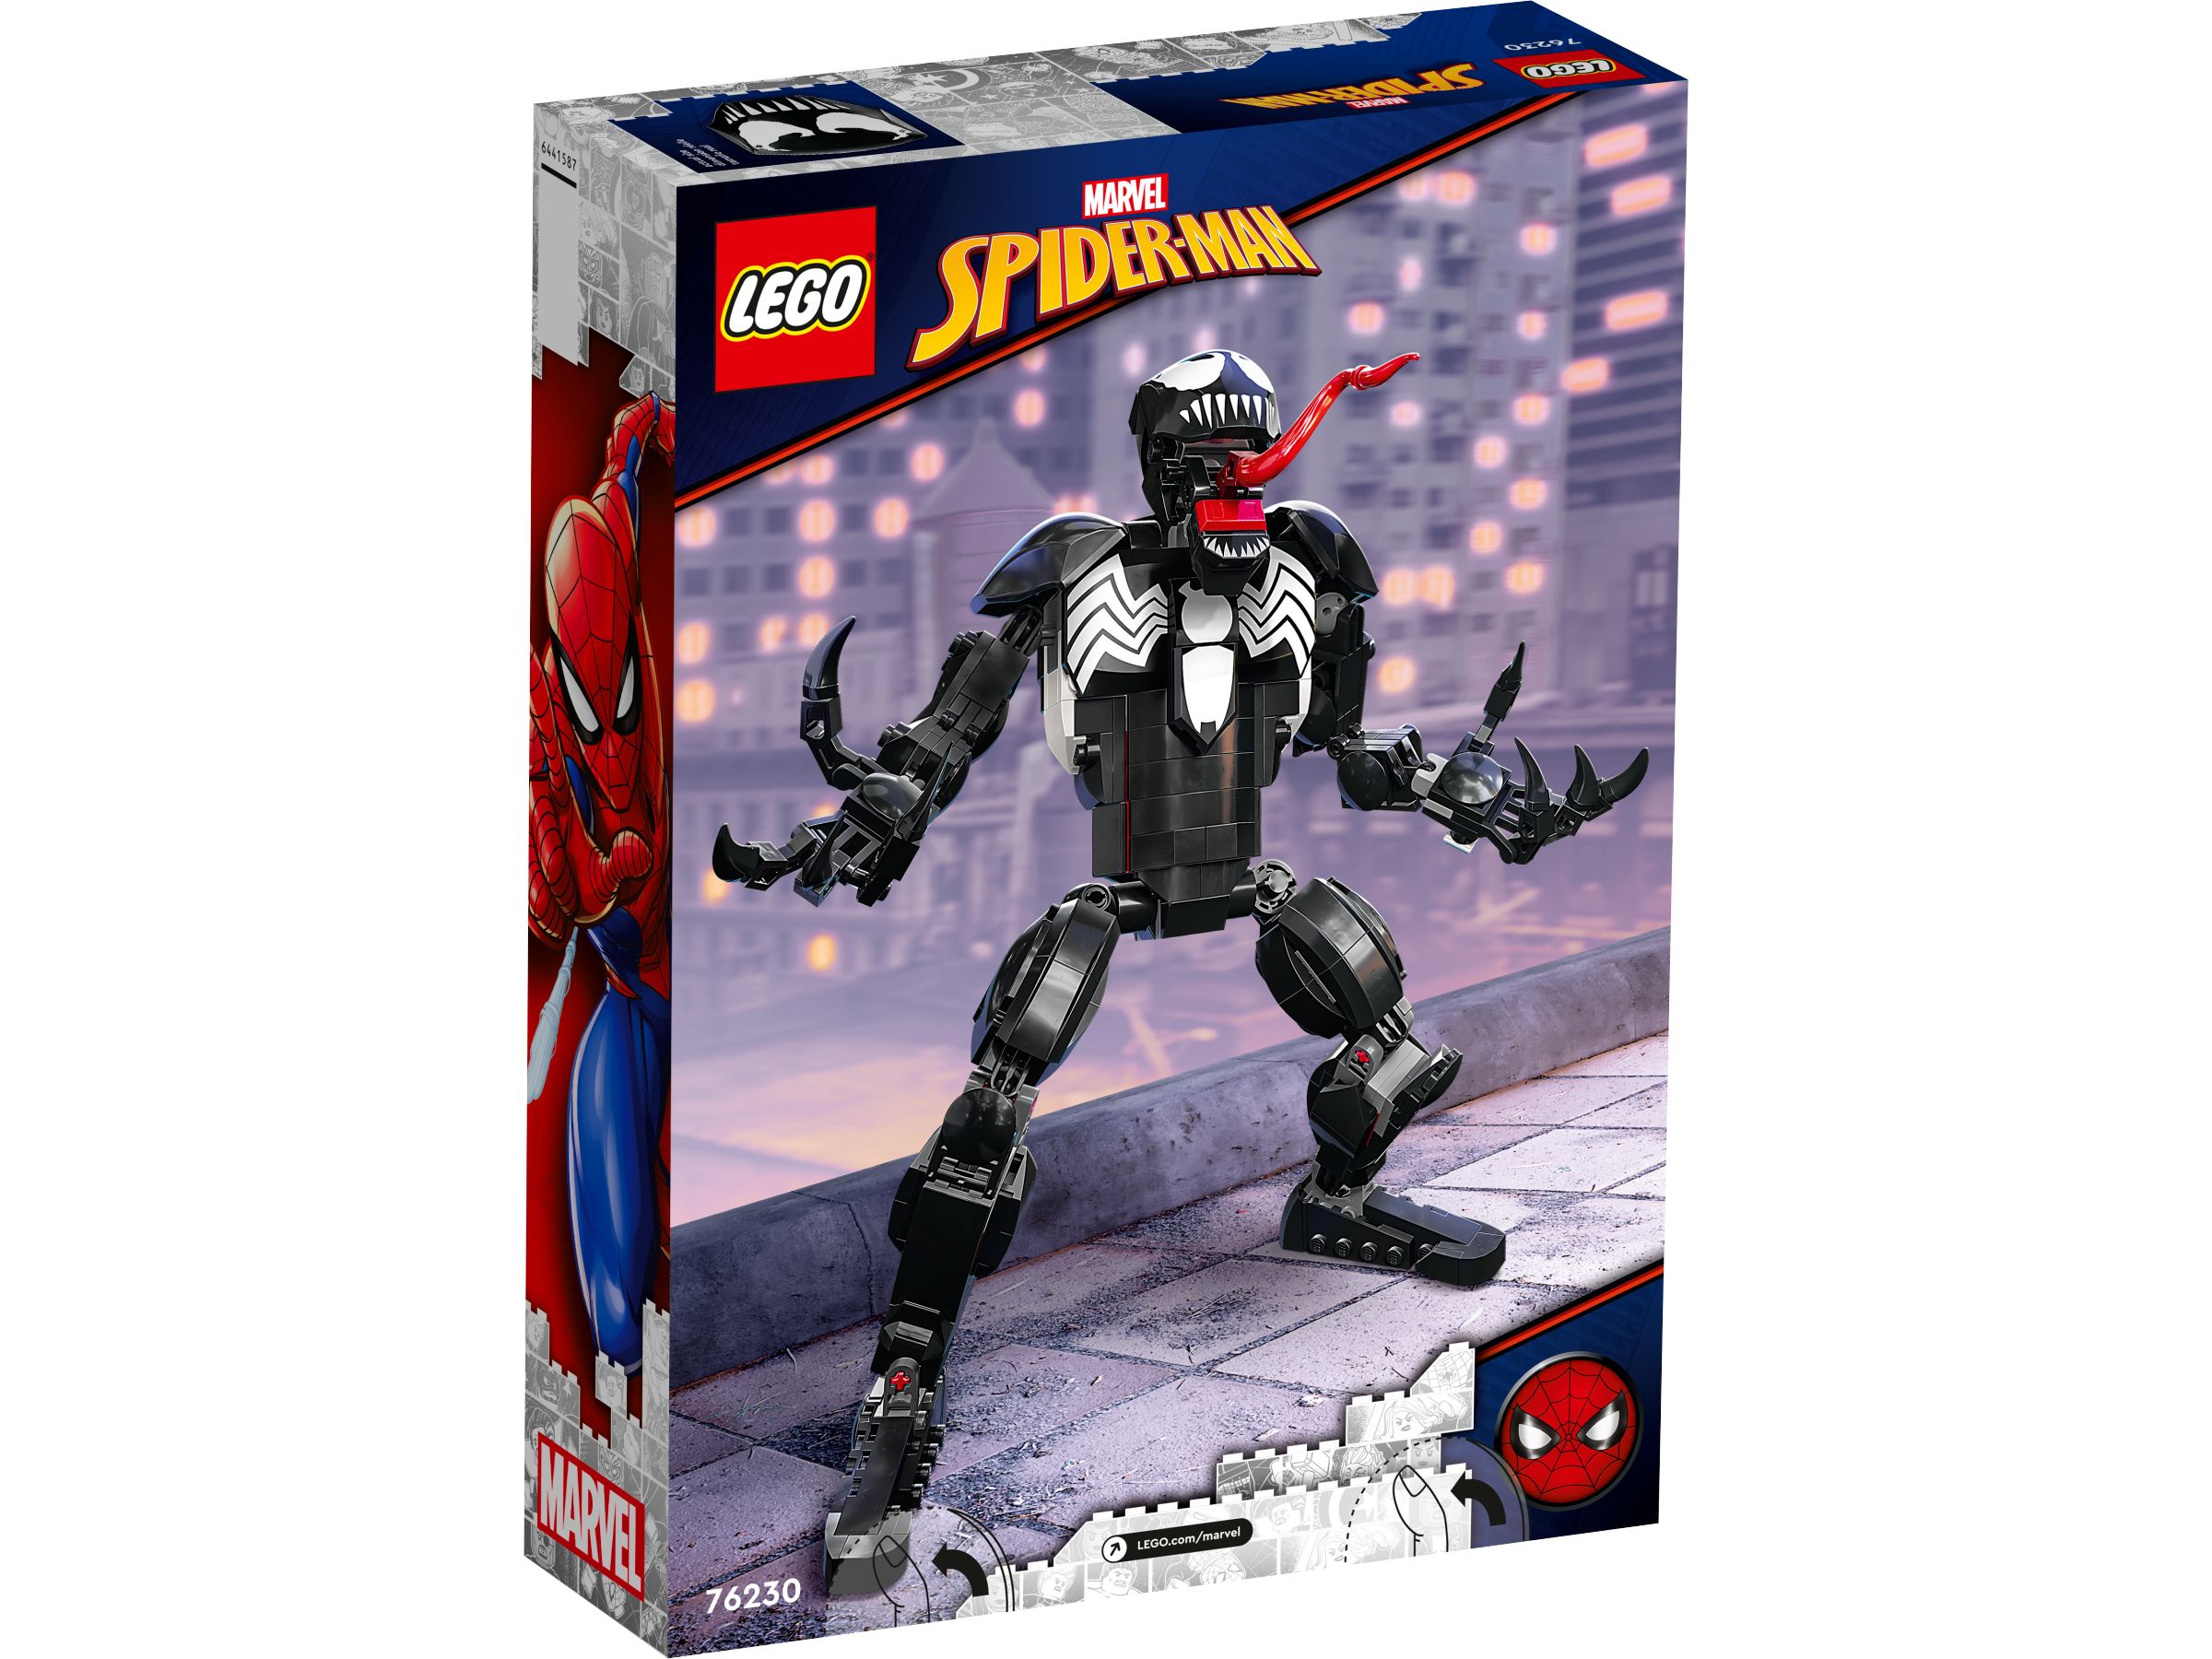 LEGO Super Heroes 76230 Venom Figur LEGO_76230_alt4.jpg